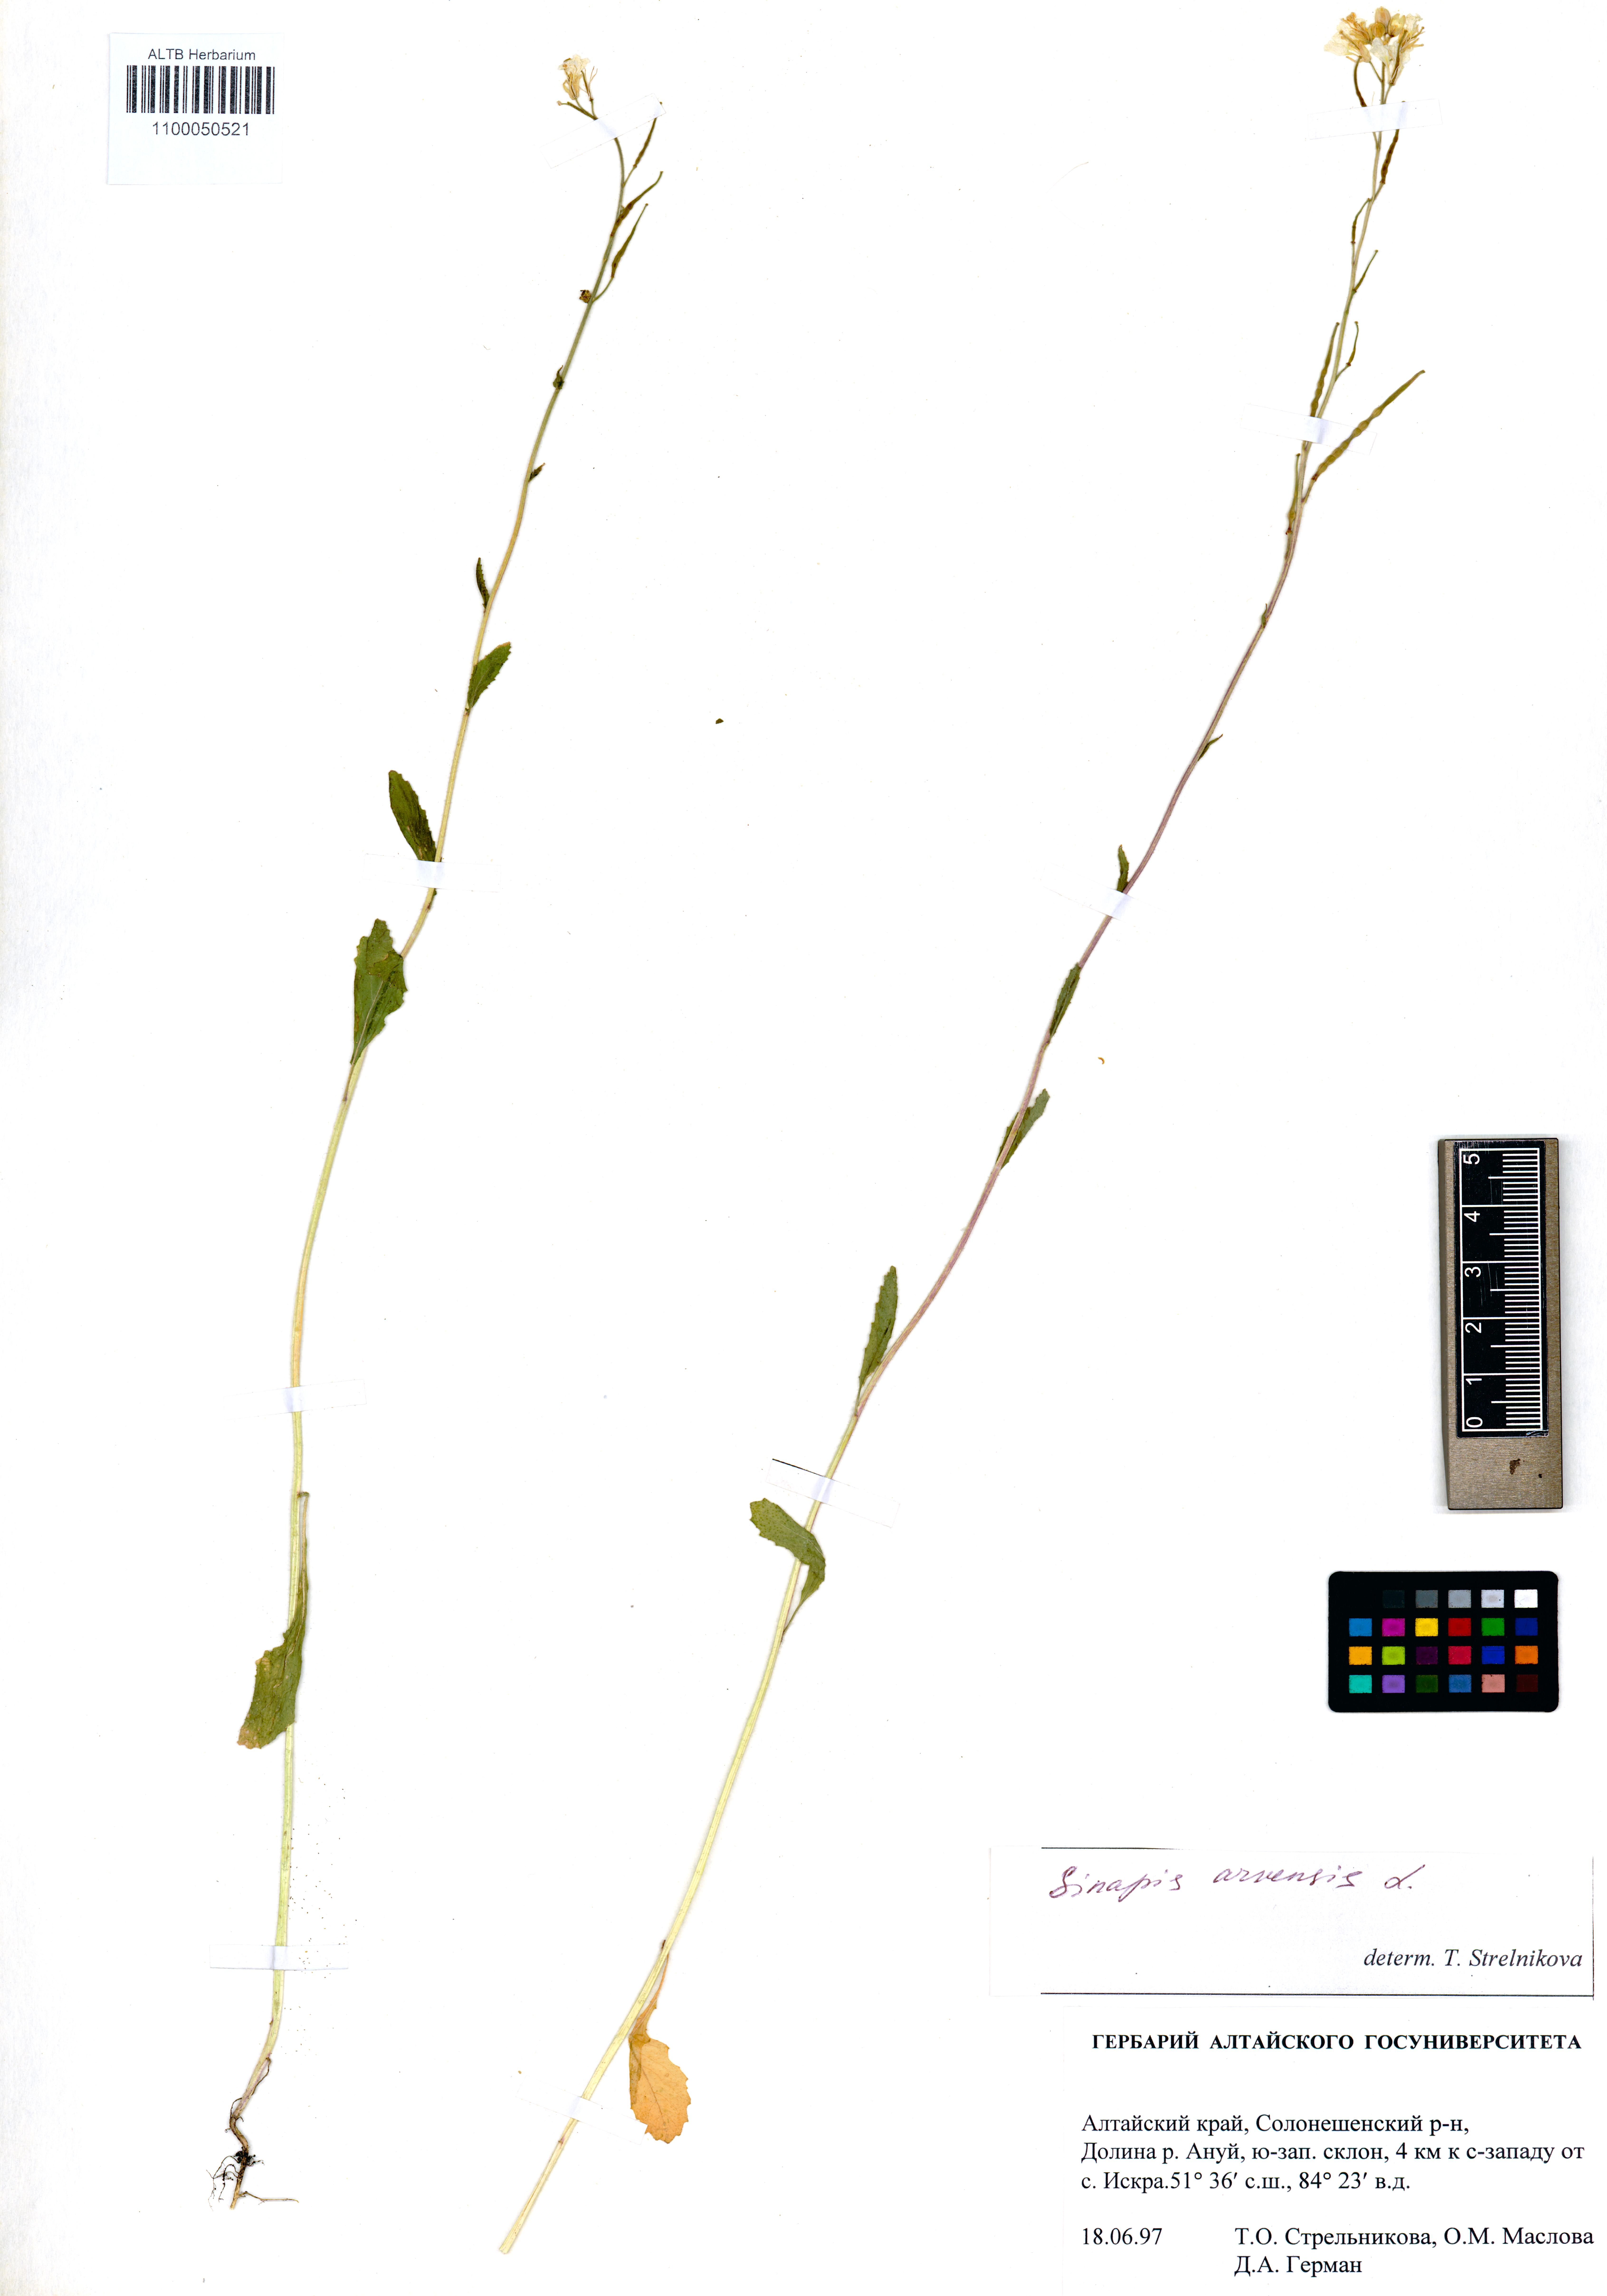 Sinapis arvensis L.